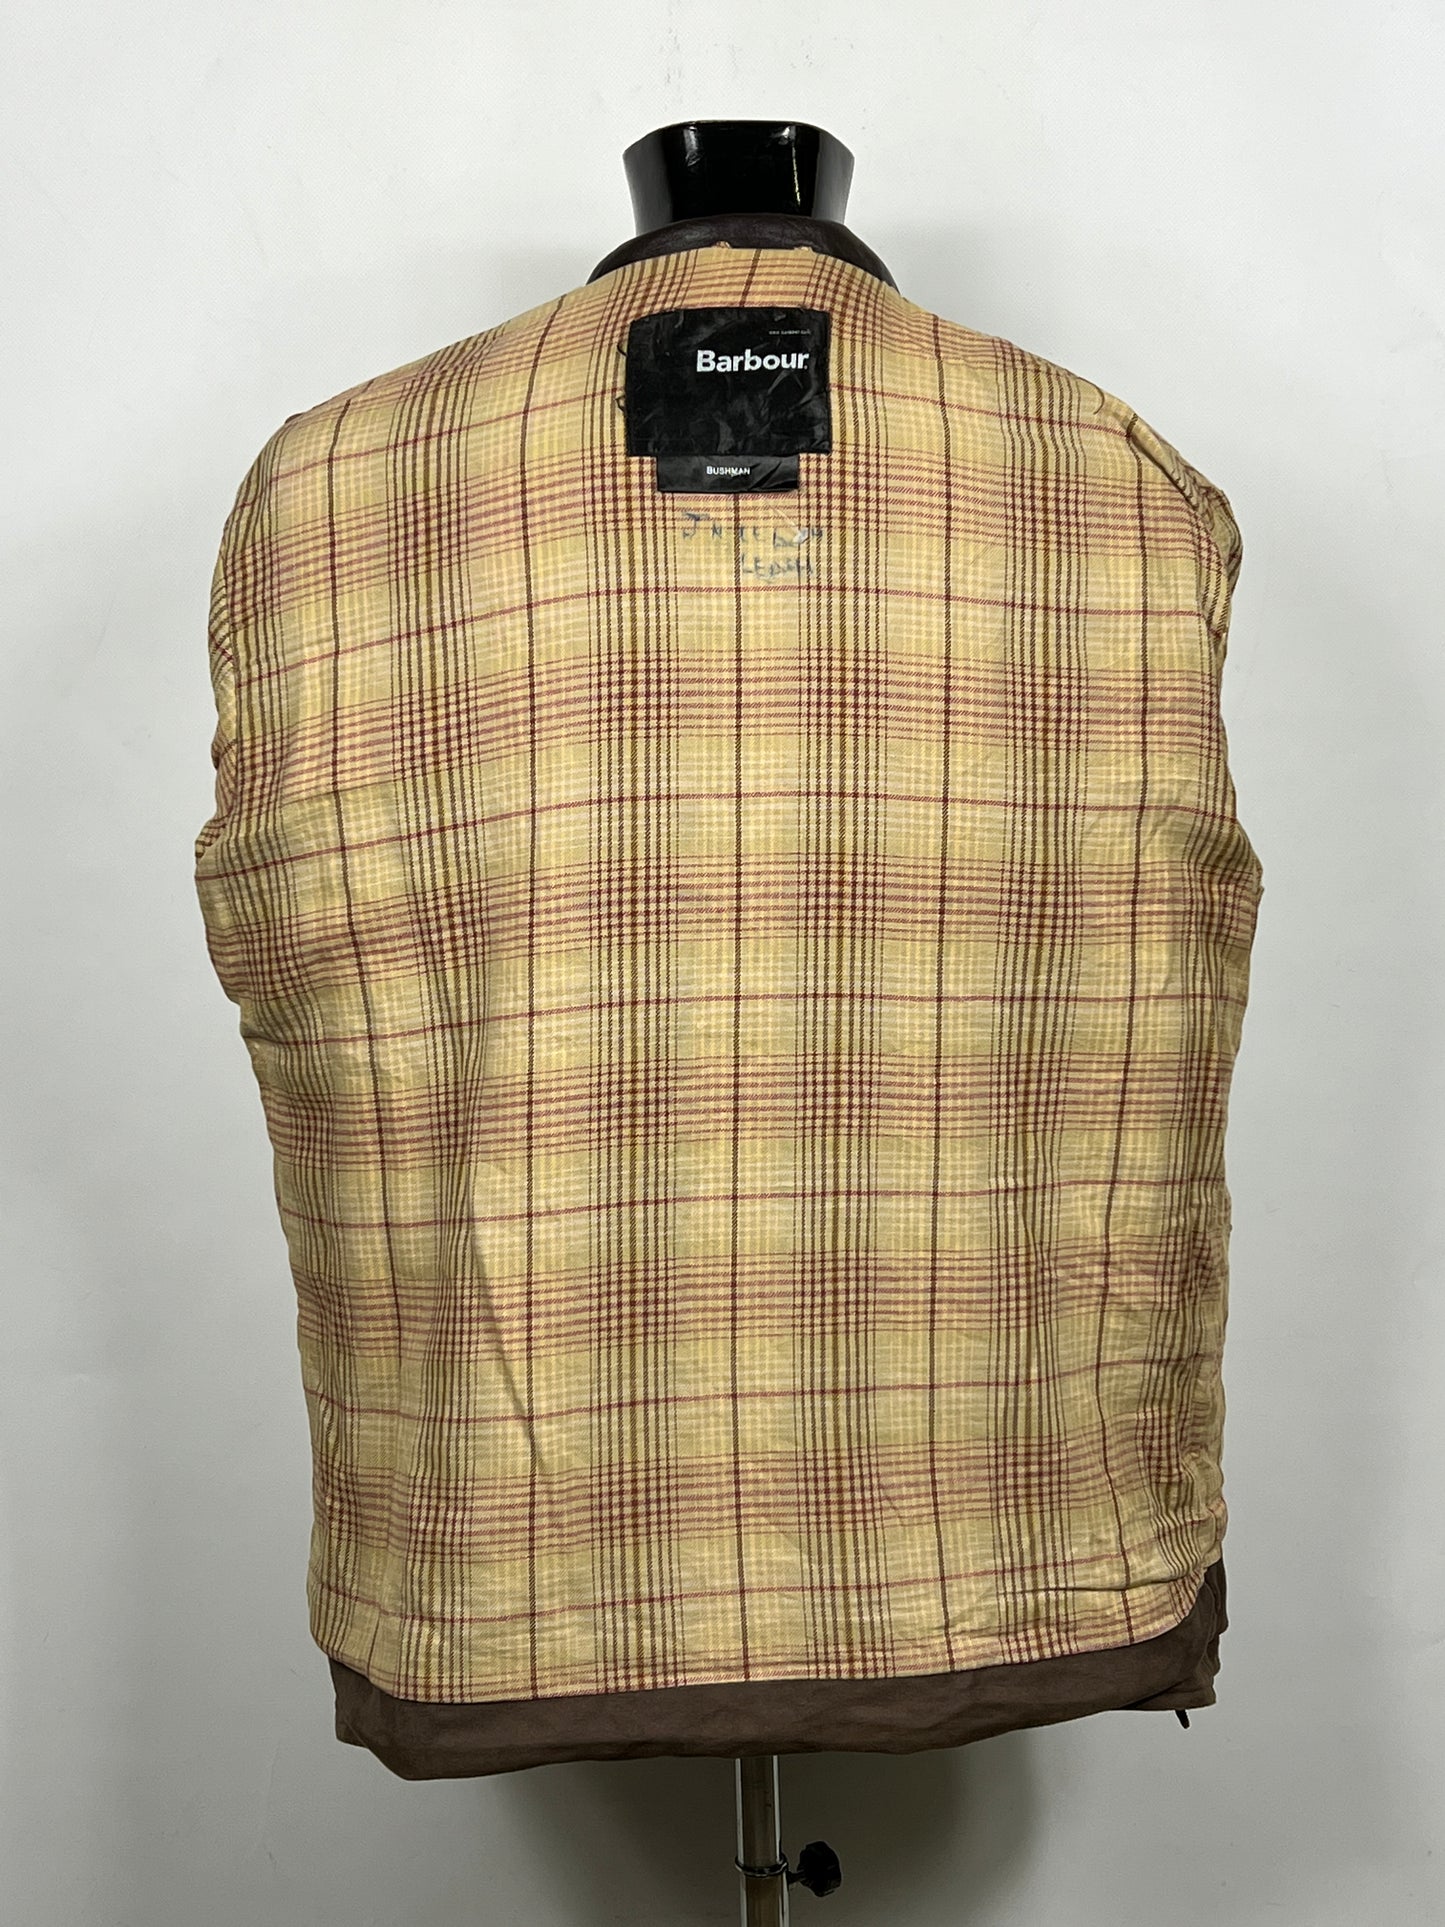 Barbour Giacca Uomo Bushman Marrone Medium- Man Wax Brown Jacket Size M